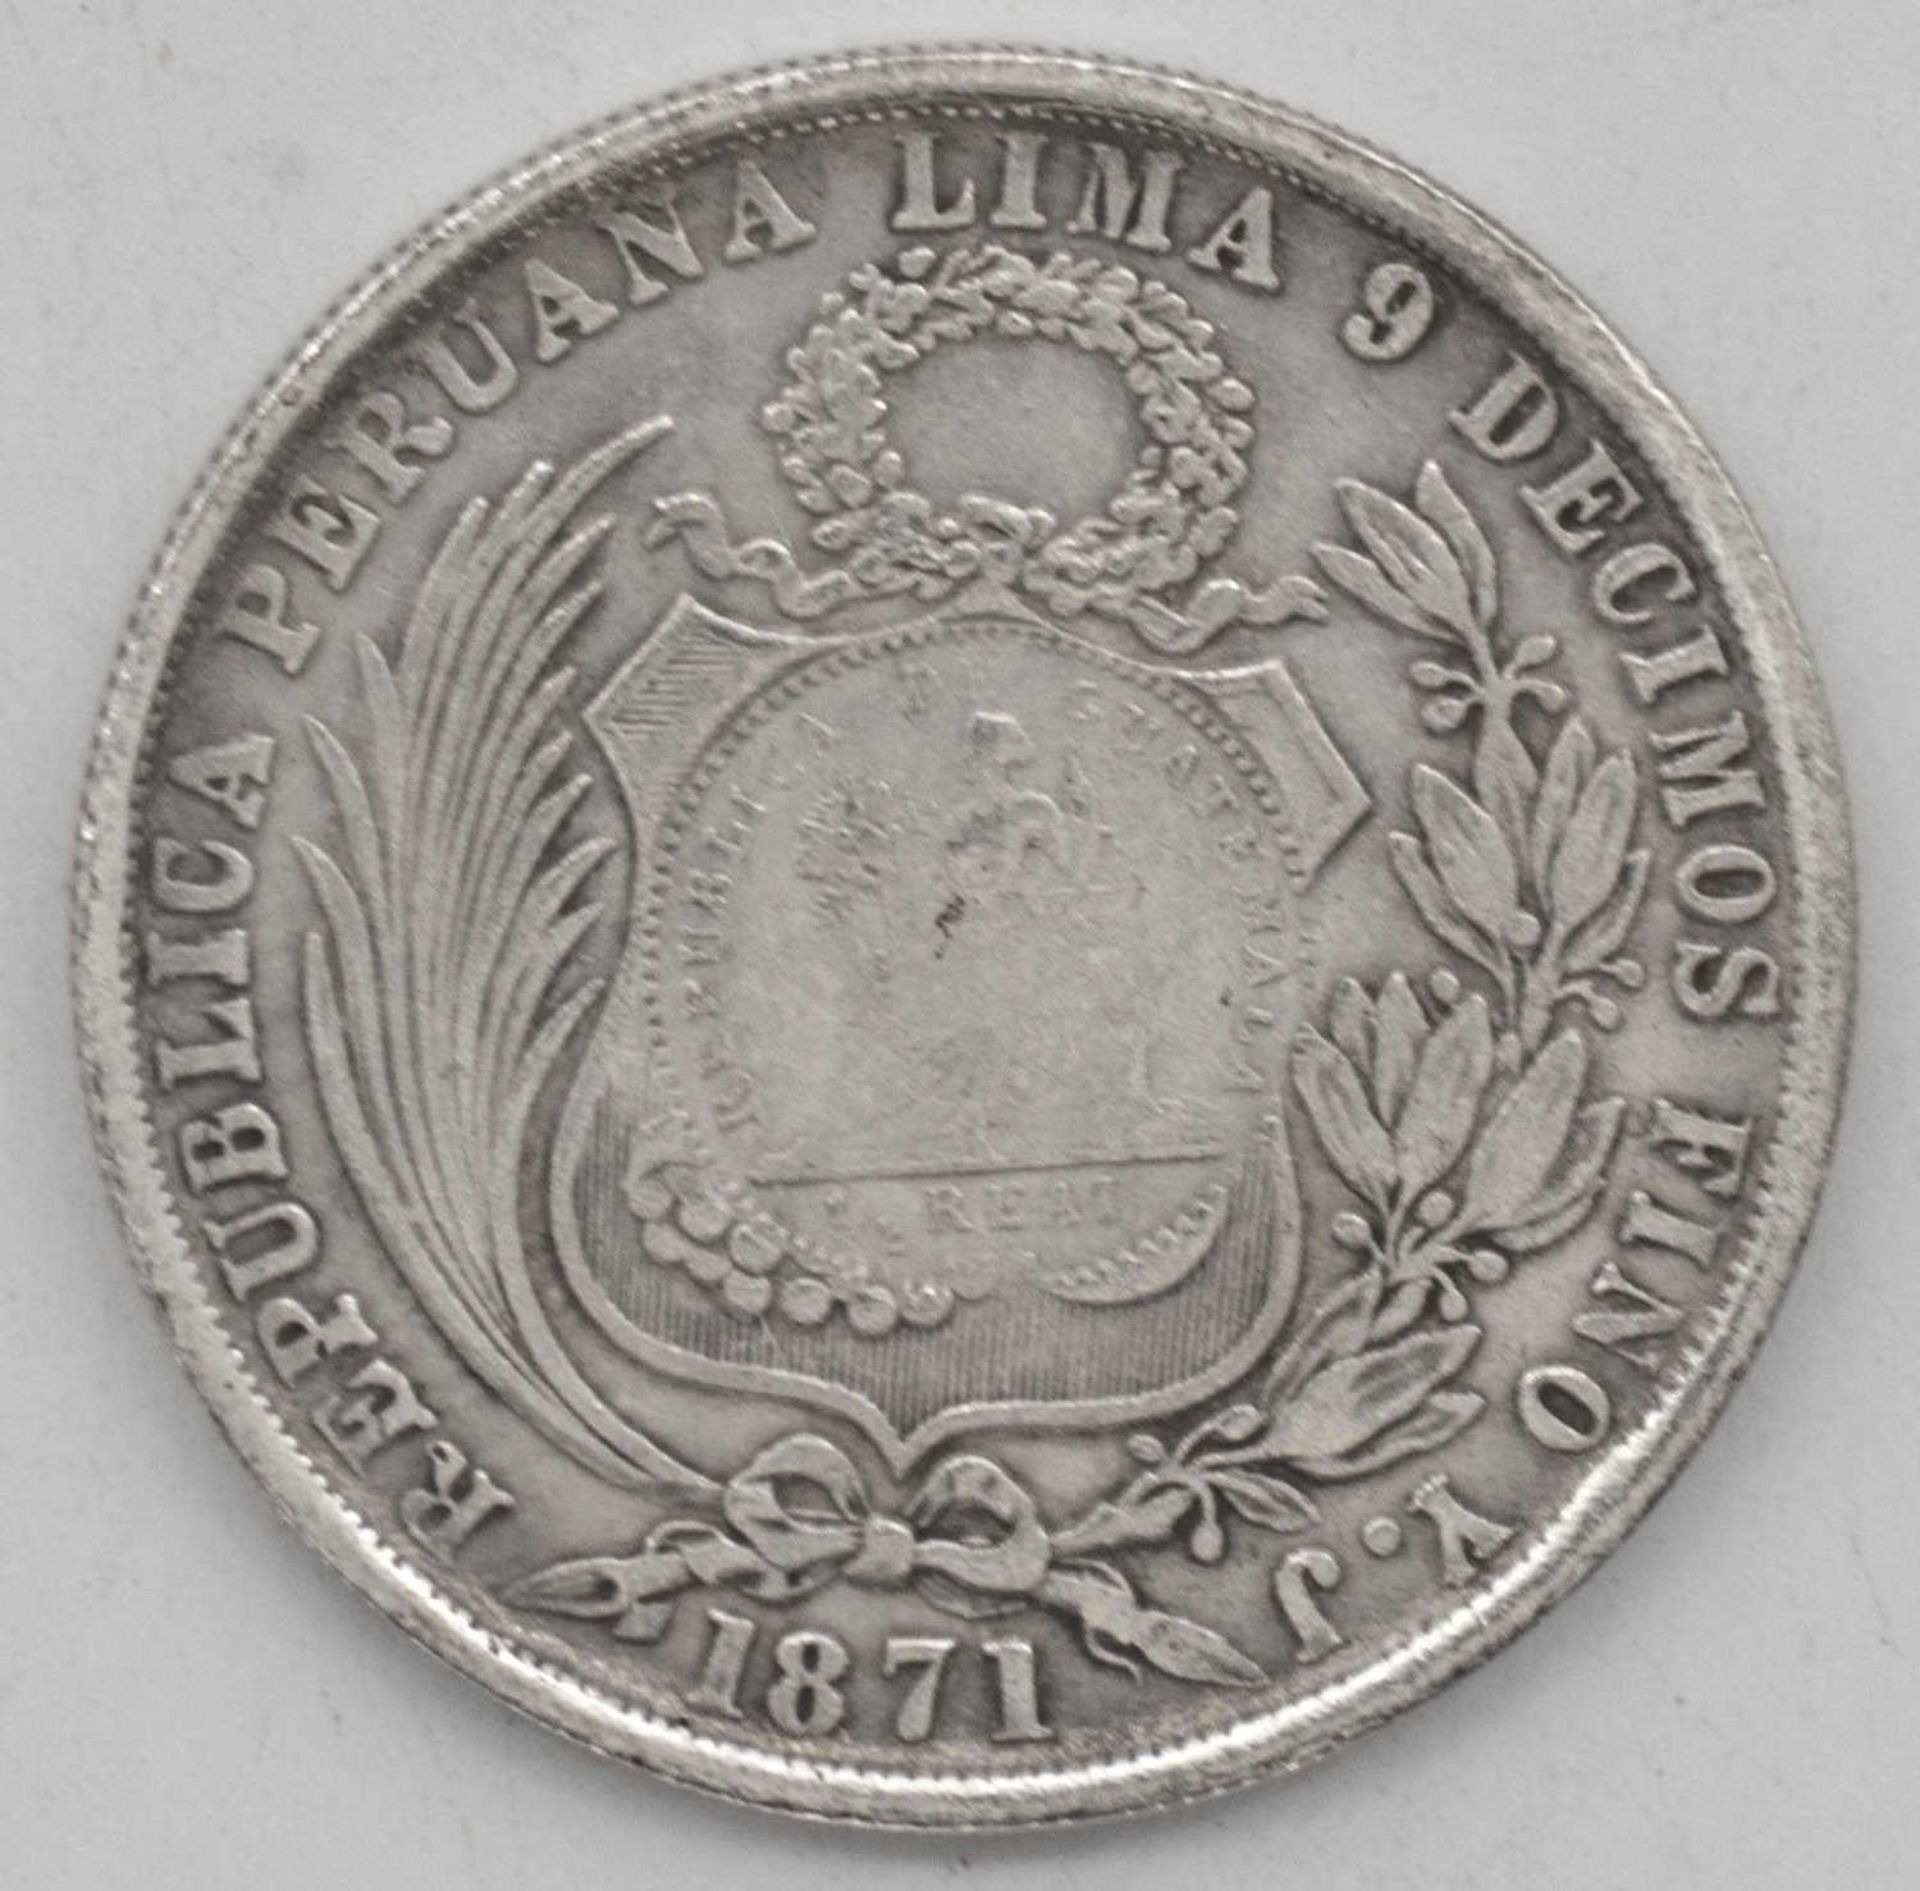 Guatemala 1894, 1/2 Real Gegenstempelung auf Republik Peru Lima 1871 1 Sol.Guatemala 1894, 1/2 real - Image 2 of 2